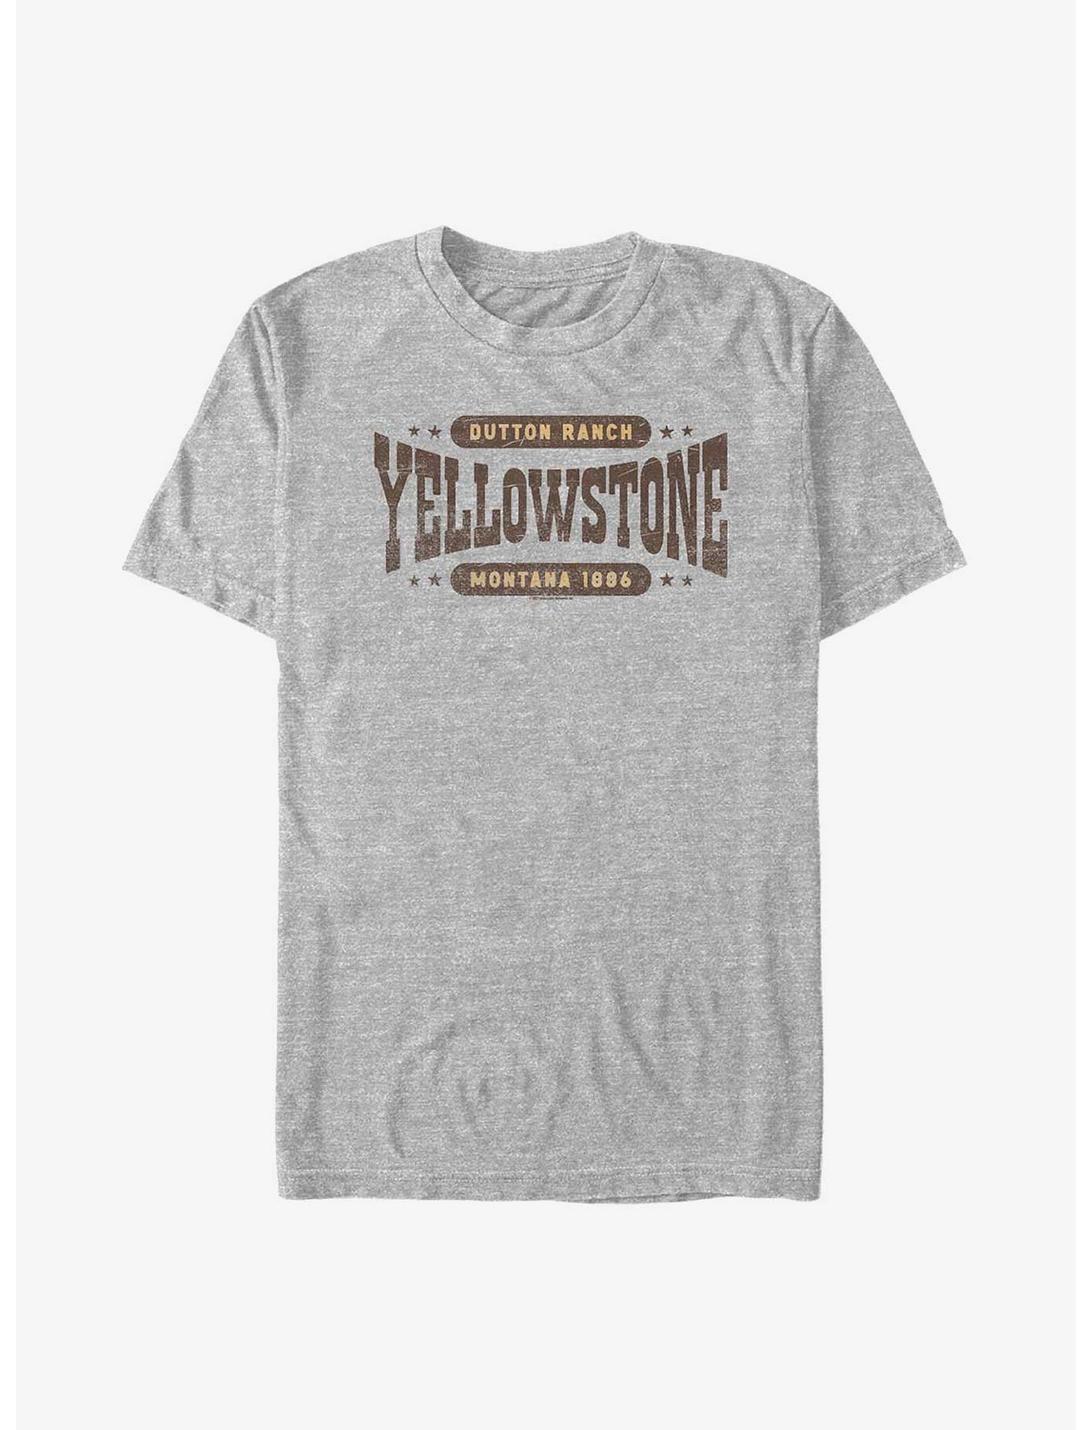 Yellowstone Dutton Ranch Montana T-Shirt, ATH HTR, hi-res